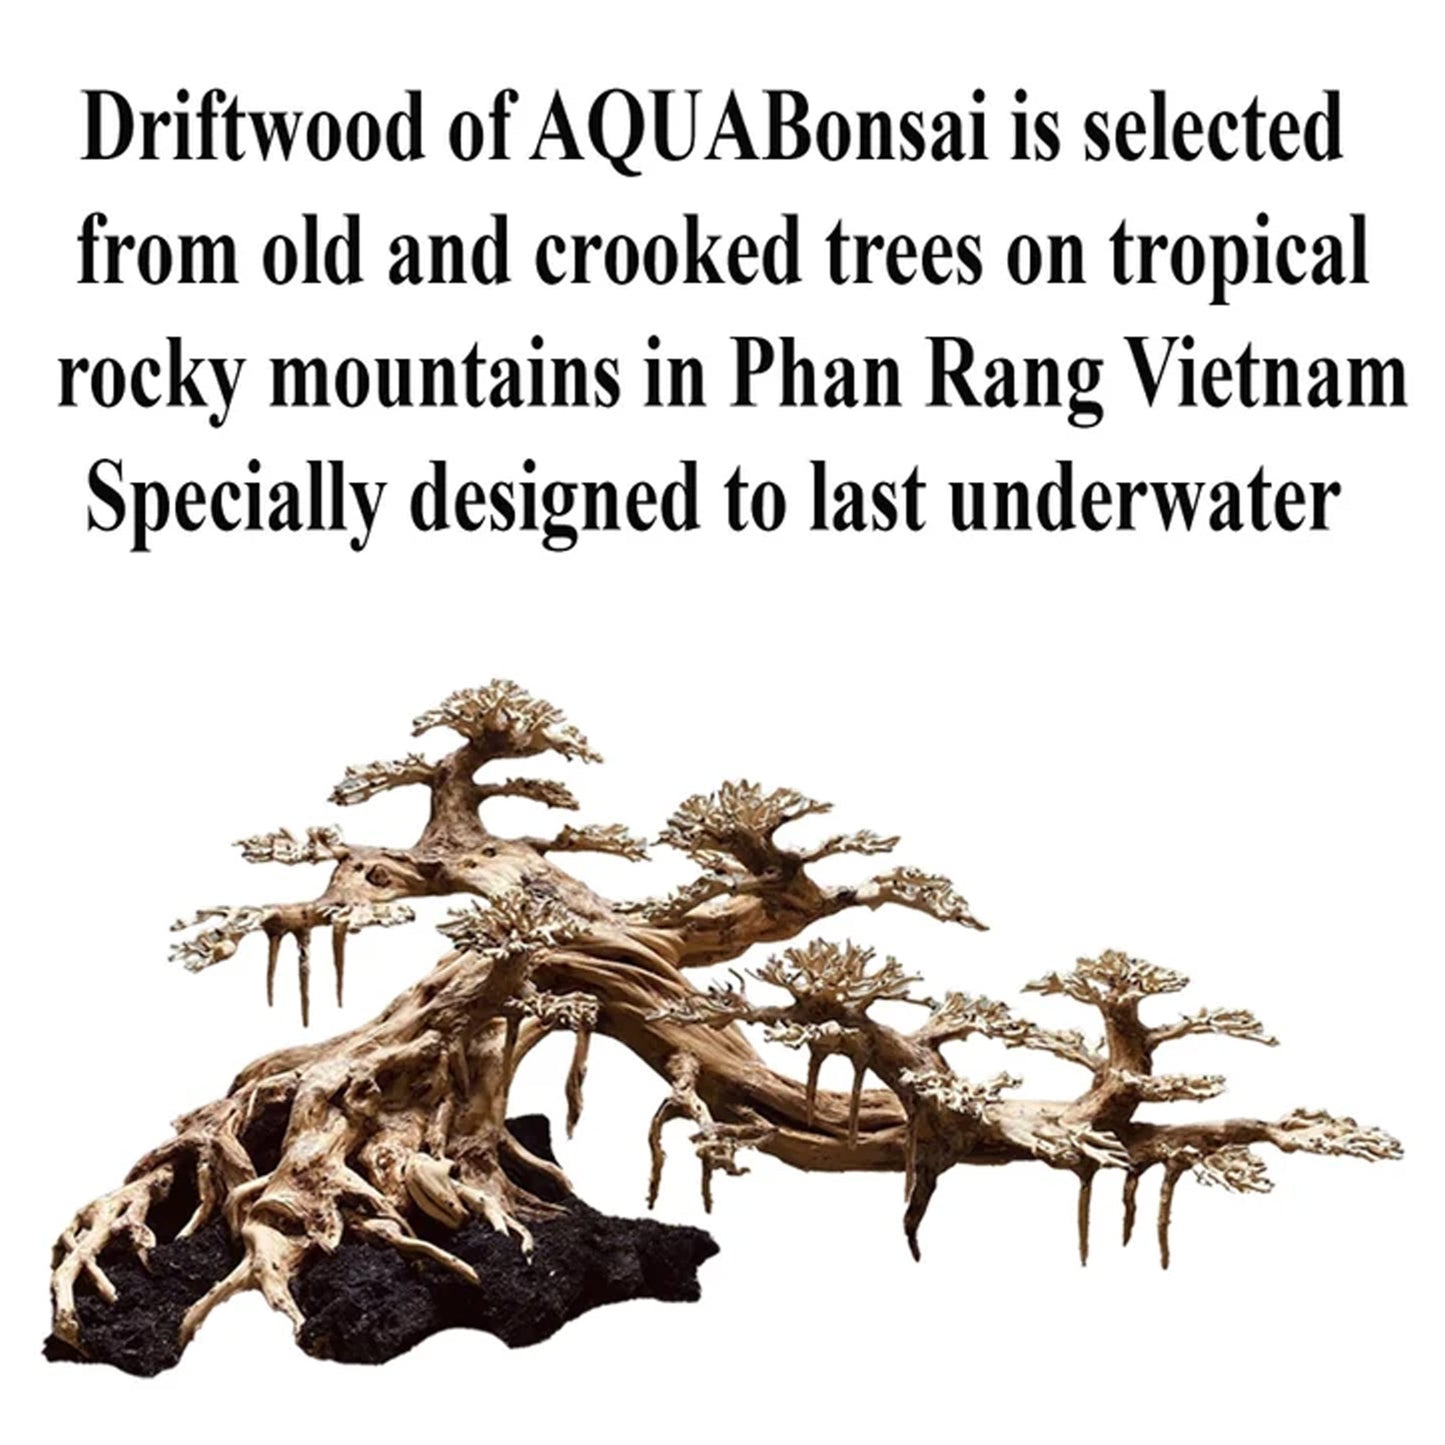 Driftwood aquarium bonsai tree aquascape wood decor fish tank background